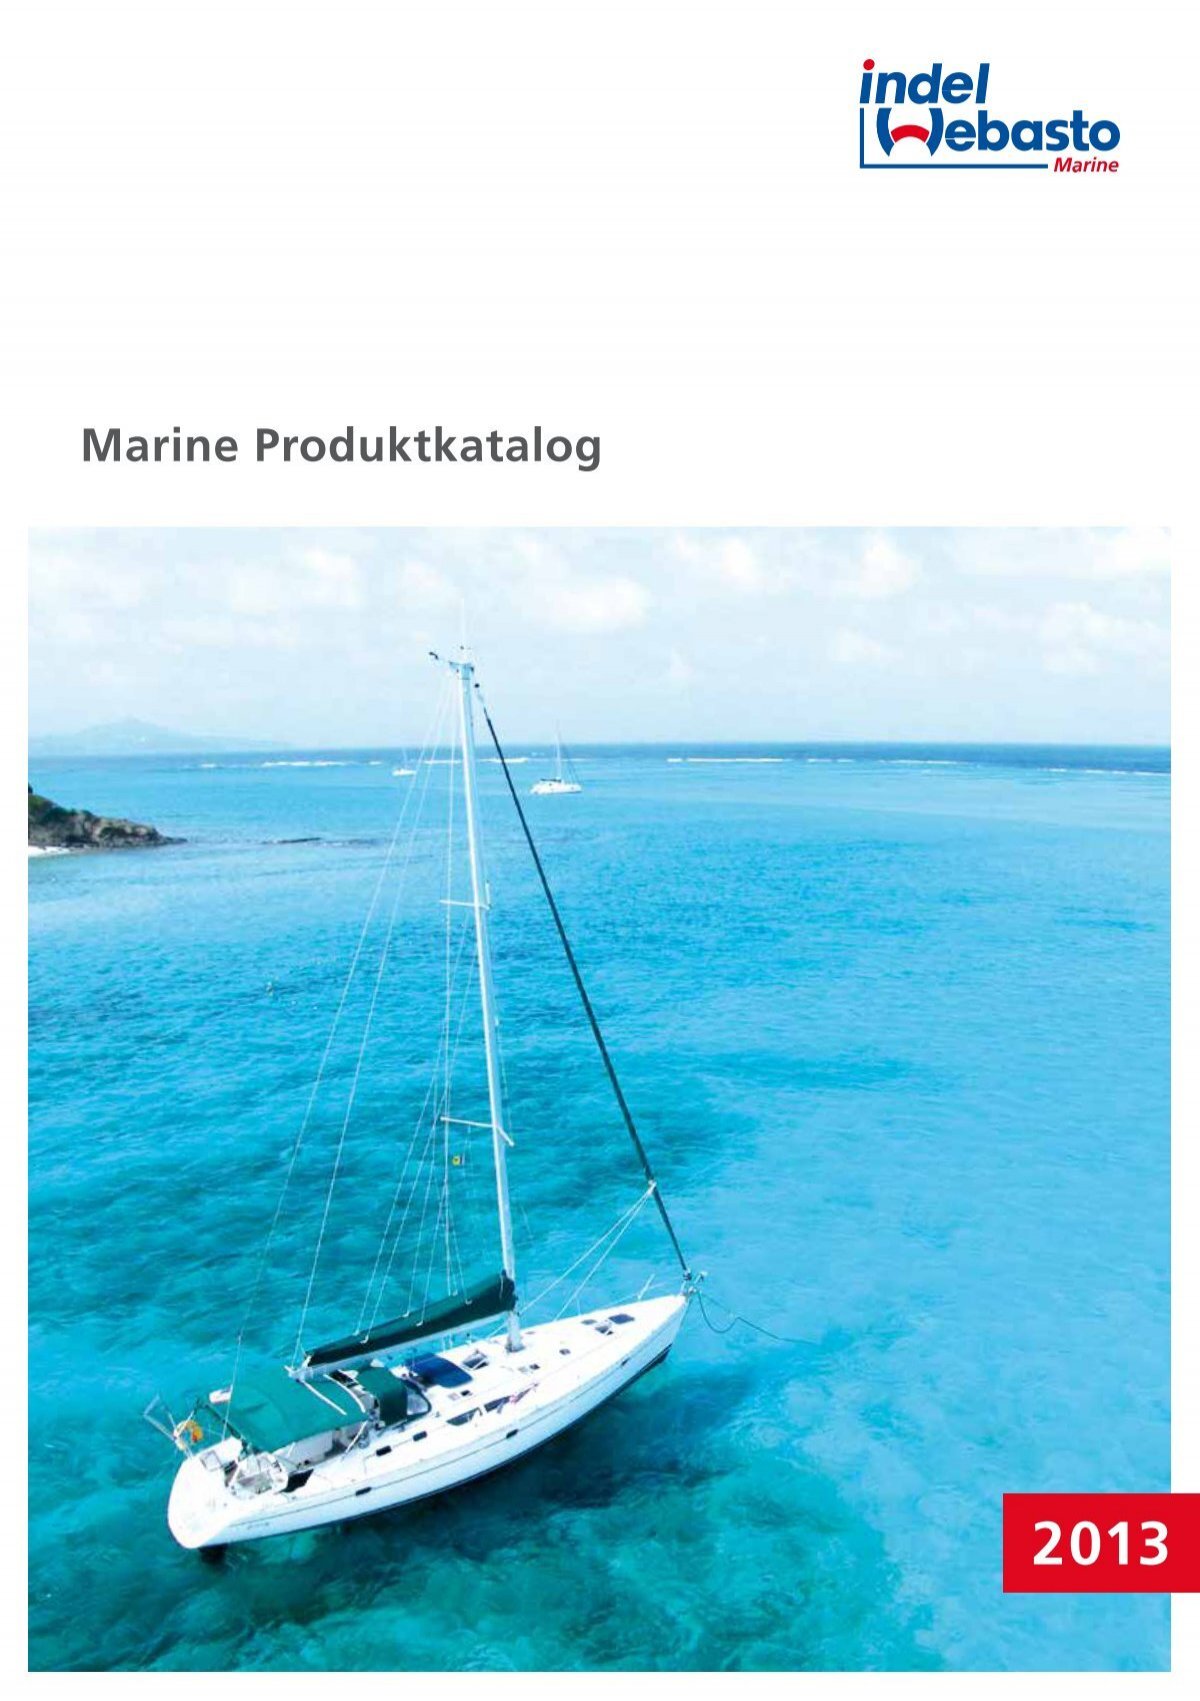 Katalog 2013 - BUKH Bremen